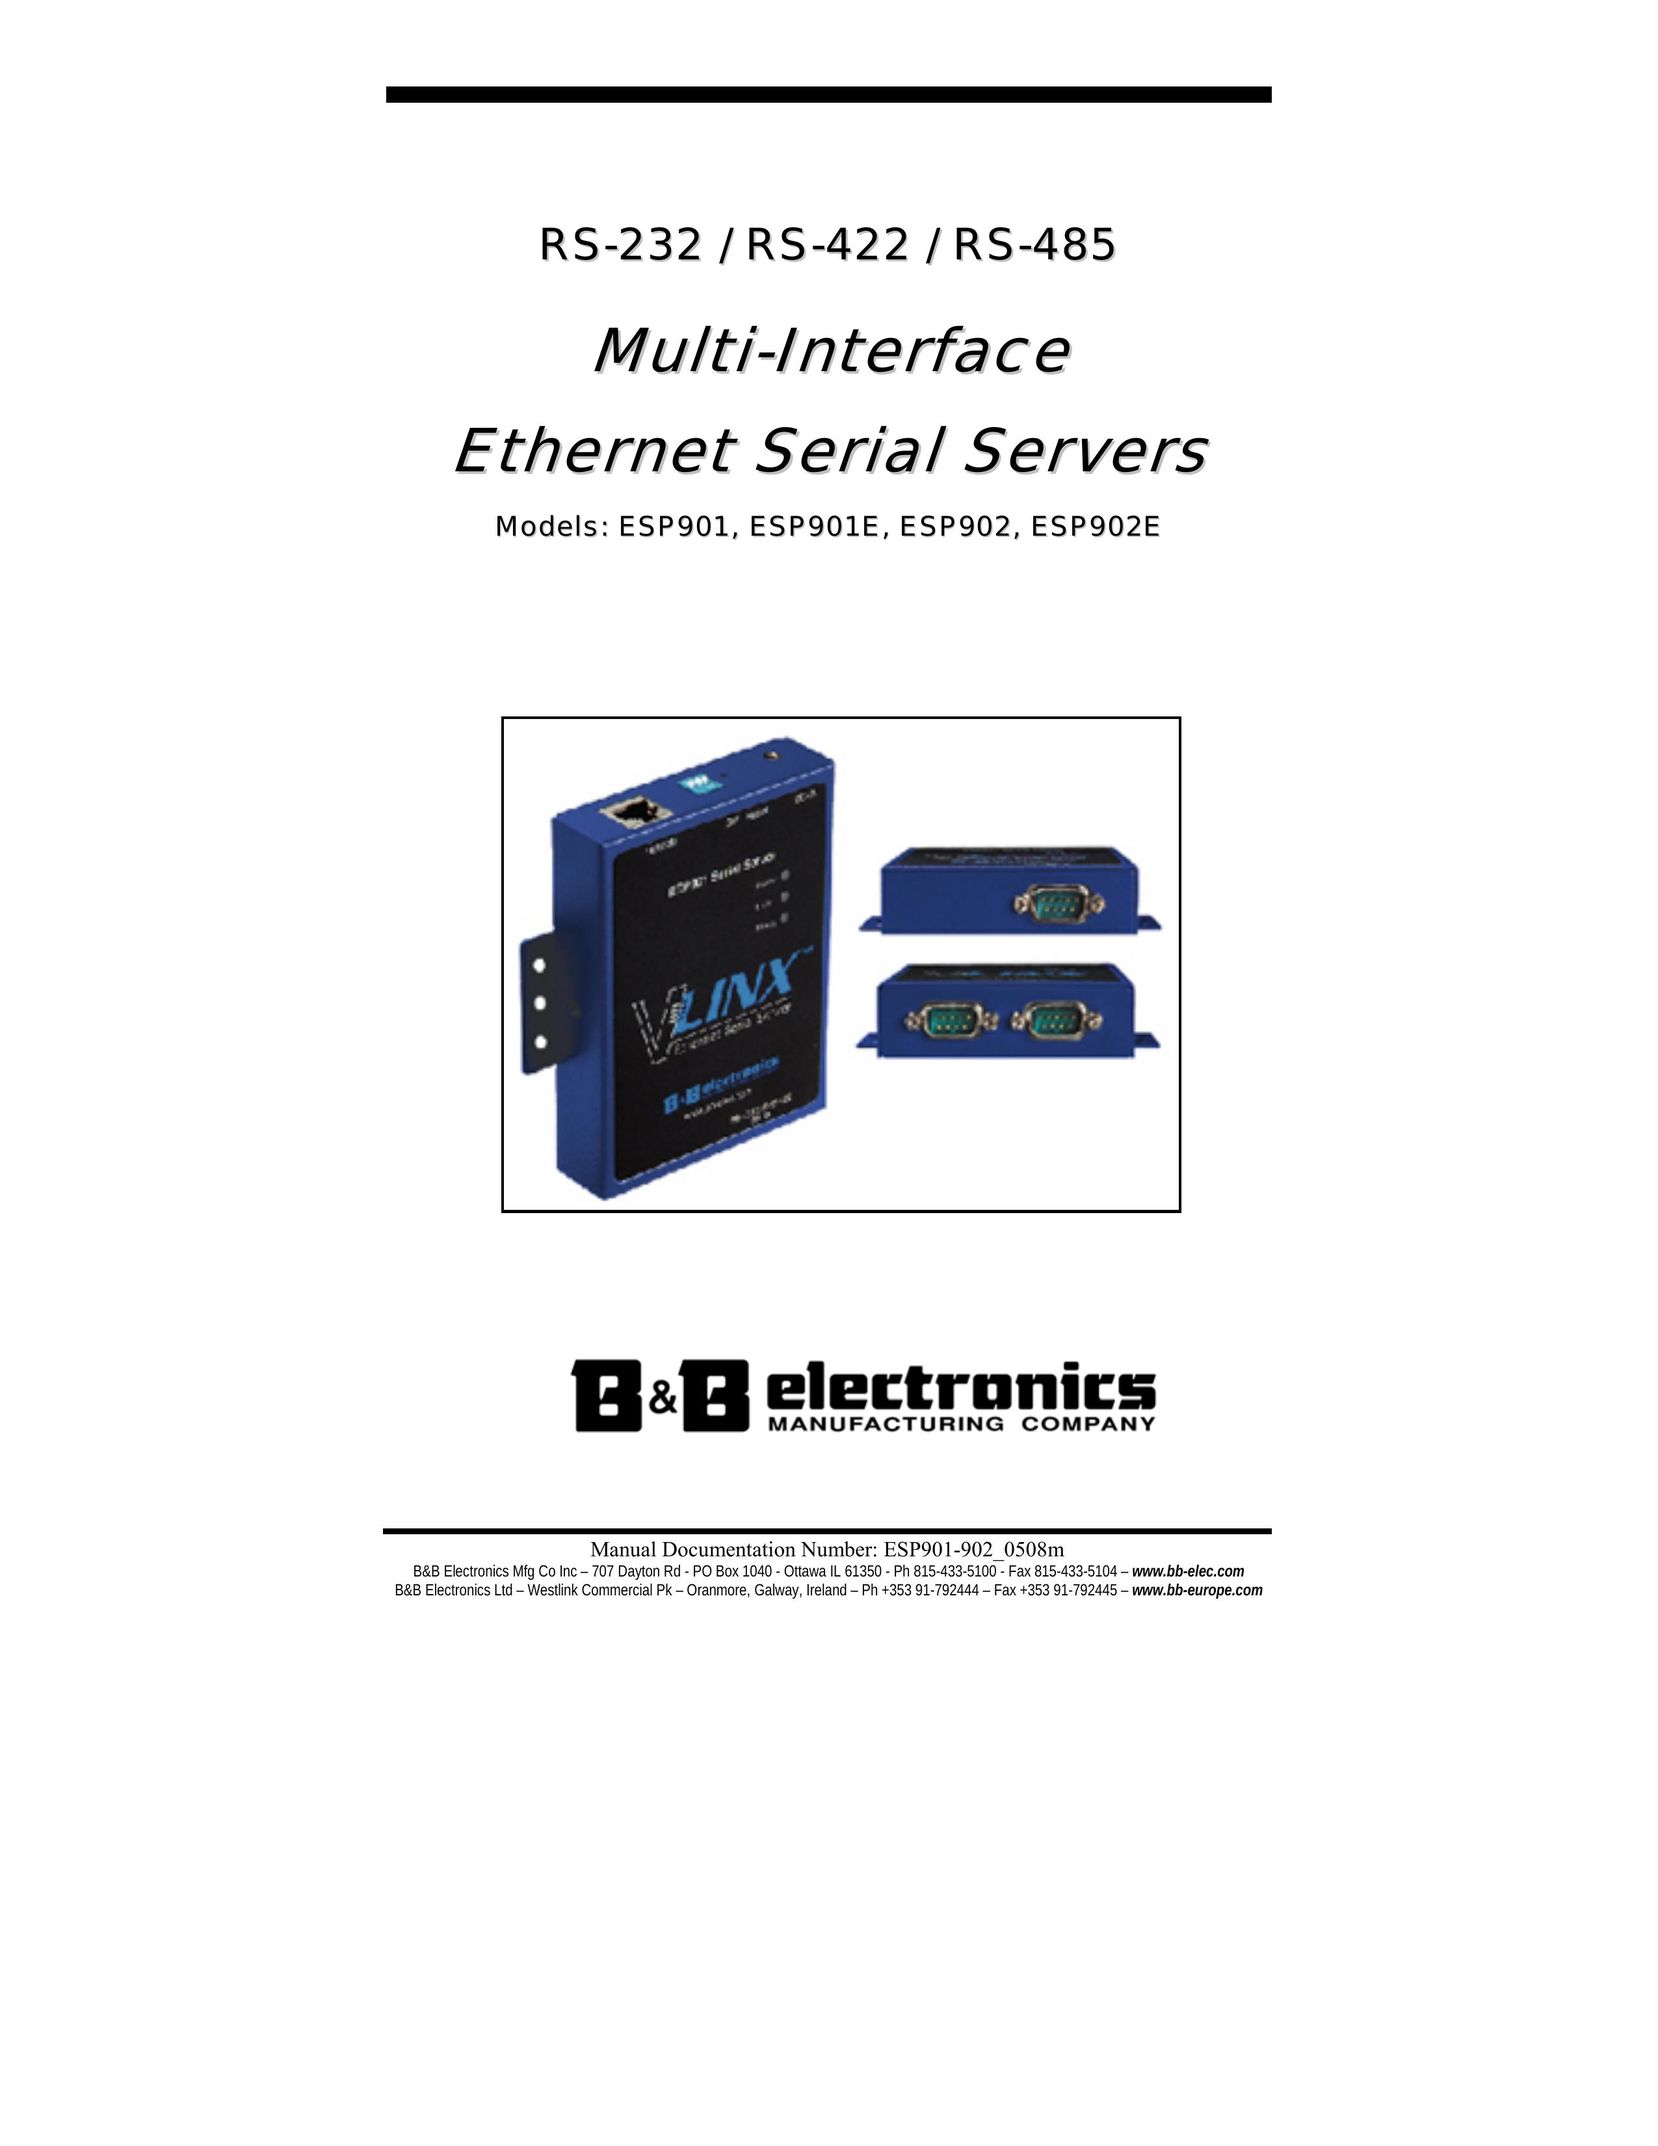 B&B Electronics ESP902E Home Theater Server User Manual